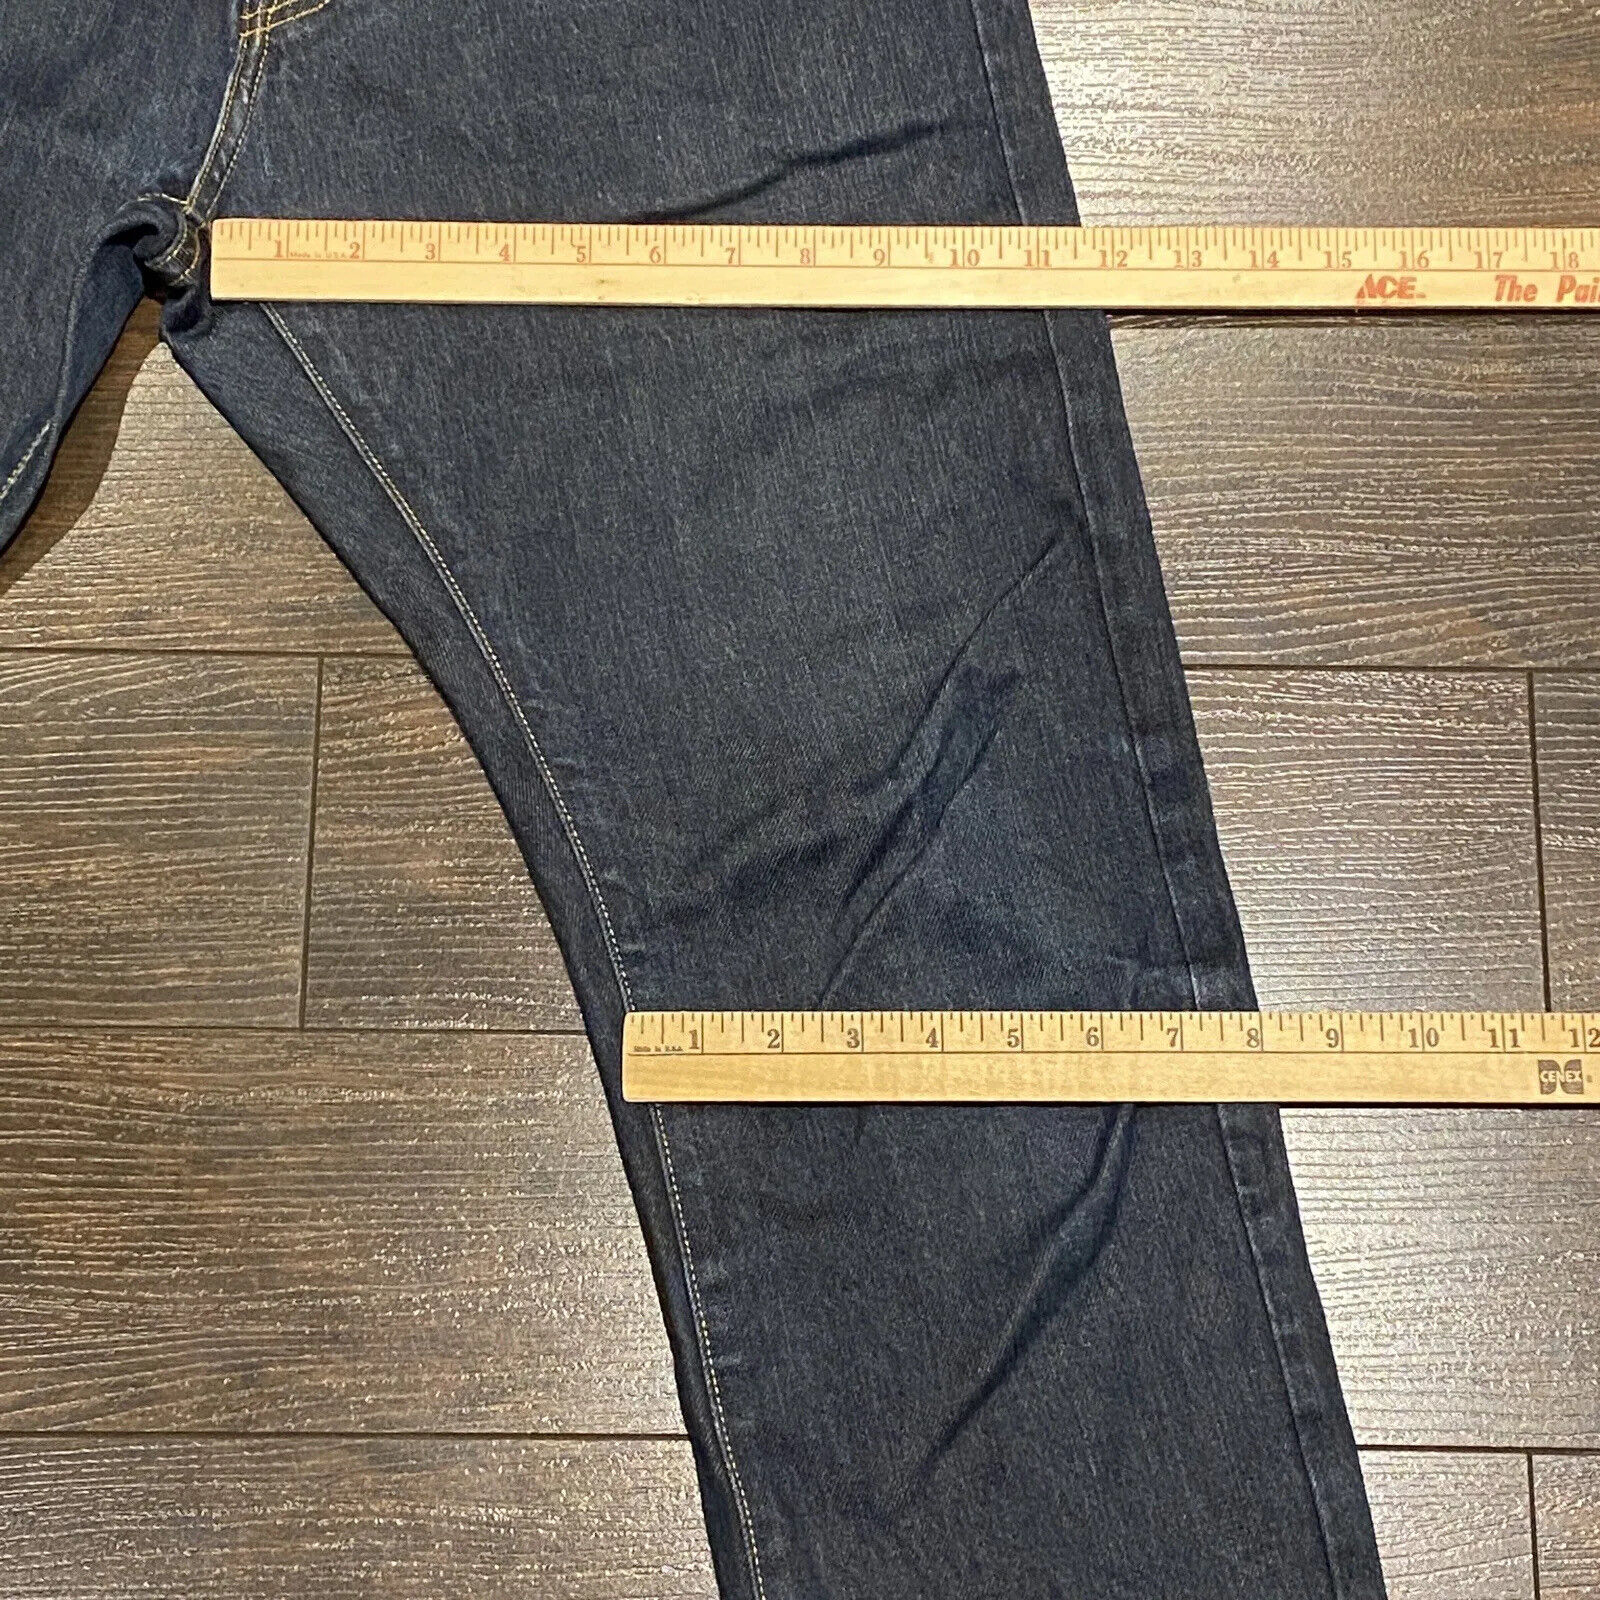 EVISU Jeans No 3 Mens Size W33 x L29 Dark Wash 100% Cotton Vintage 2000’s